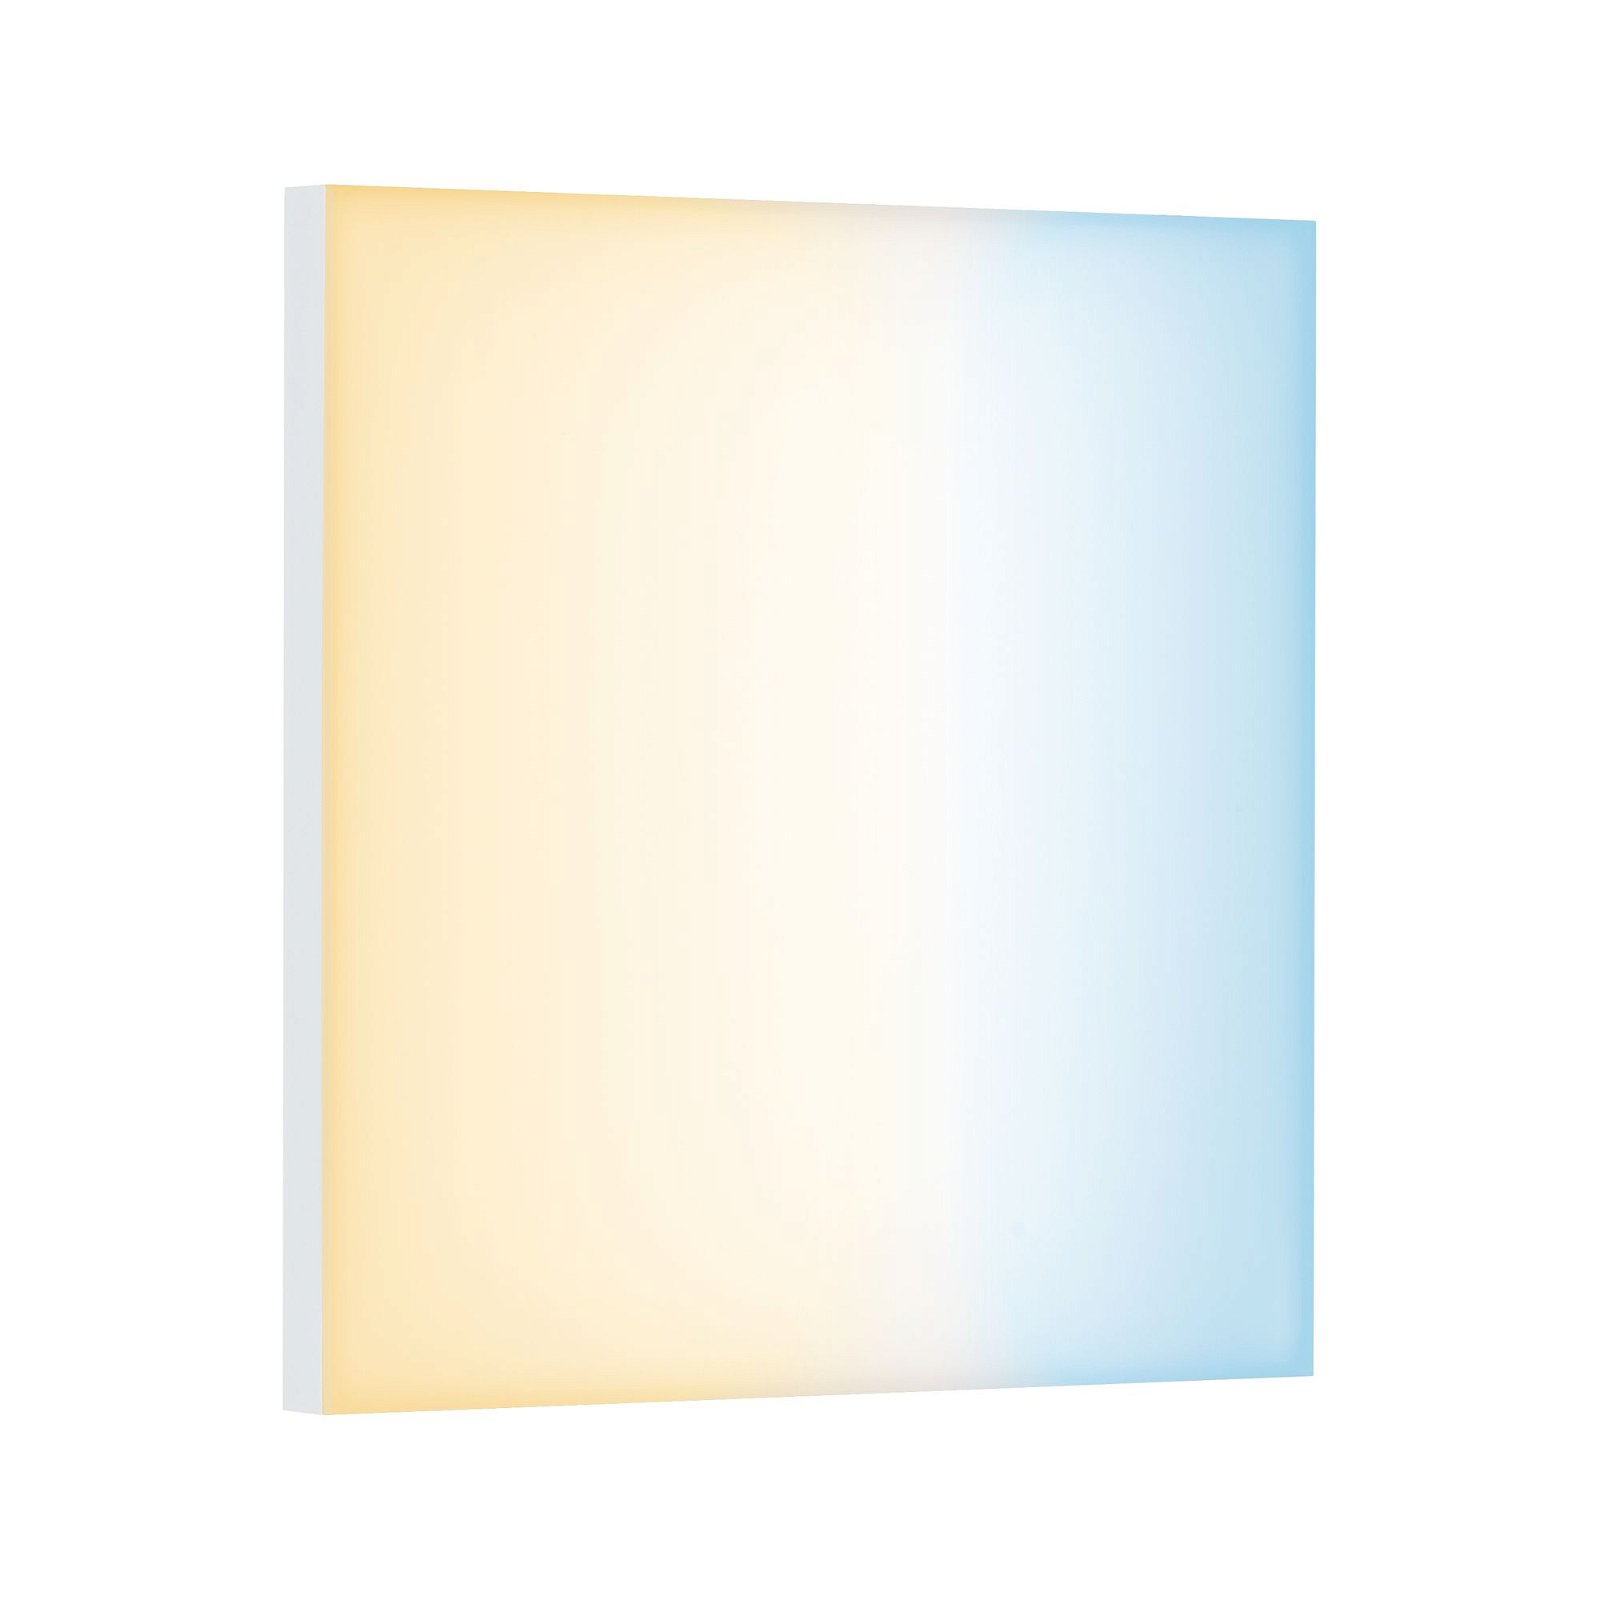 Panneau LED Smart Home Zigbee 3.0 Velora carré 295x295mm 10,5W 1100lm Tunable White Blanc dépoli gradable